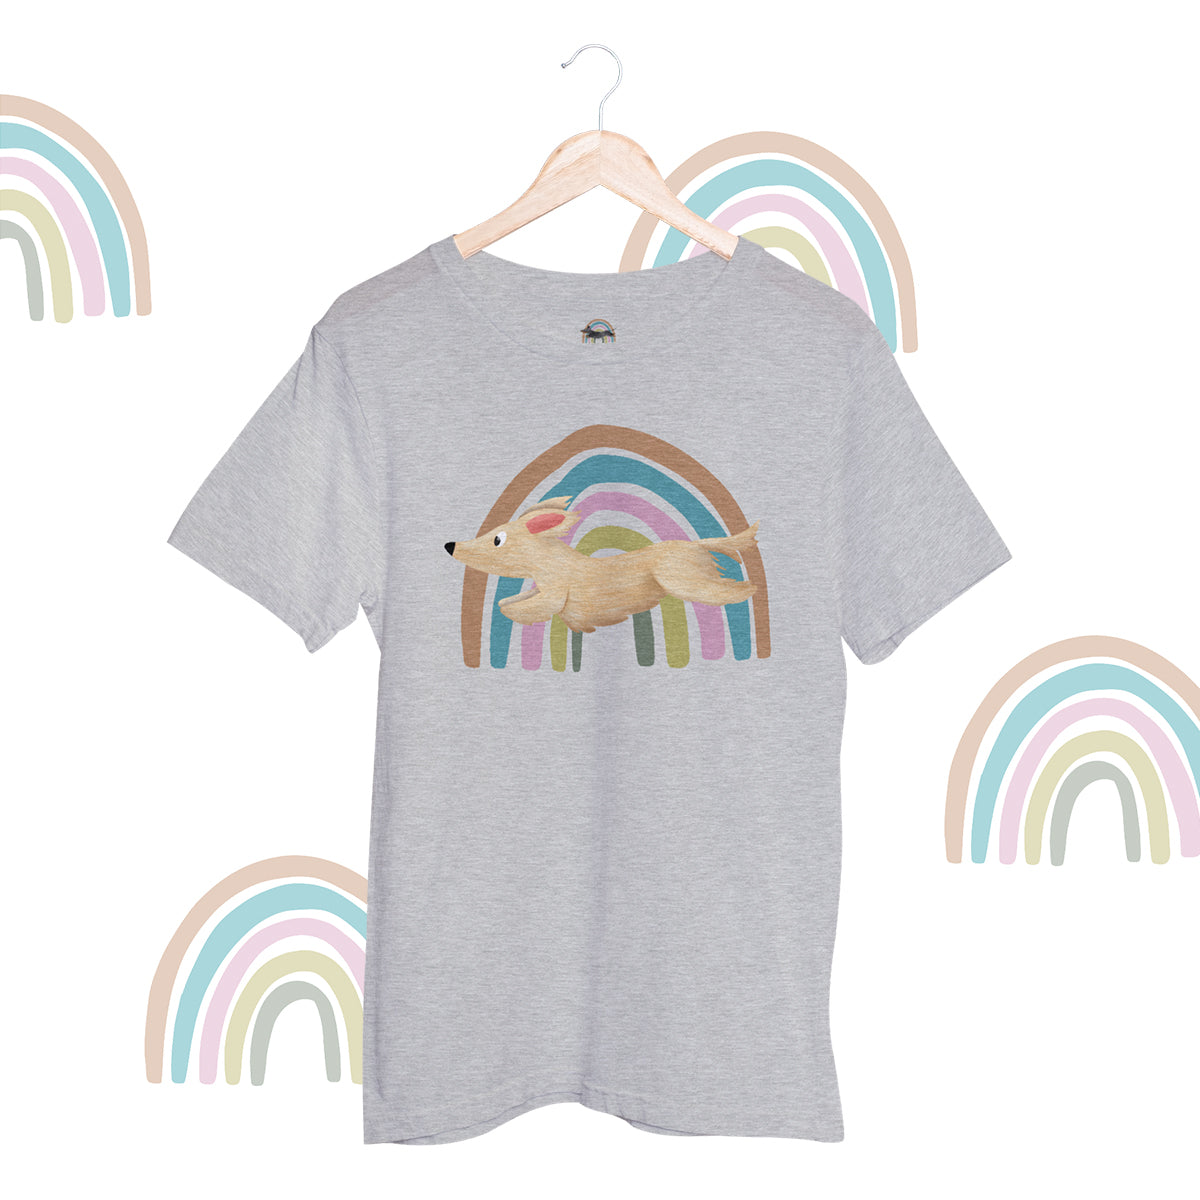 Unisex Shirt "Rainbow" Cream